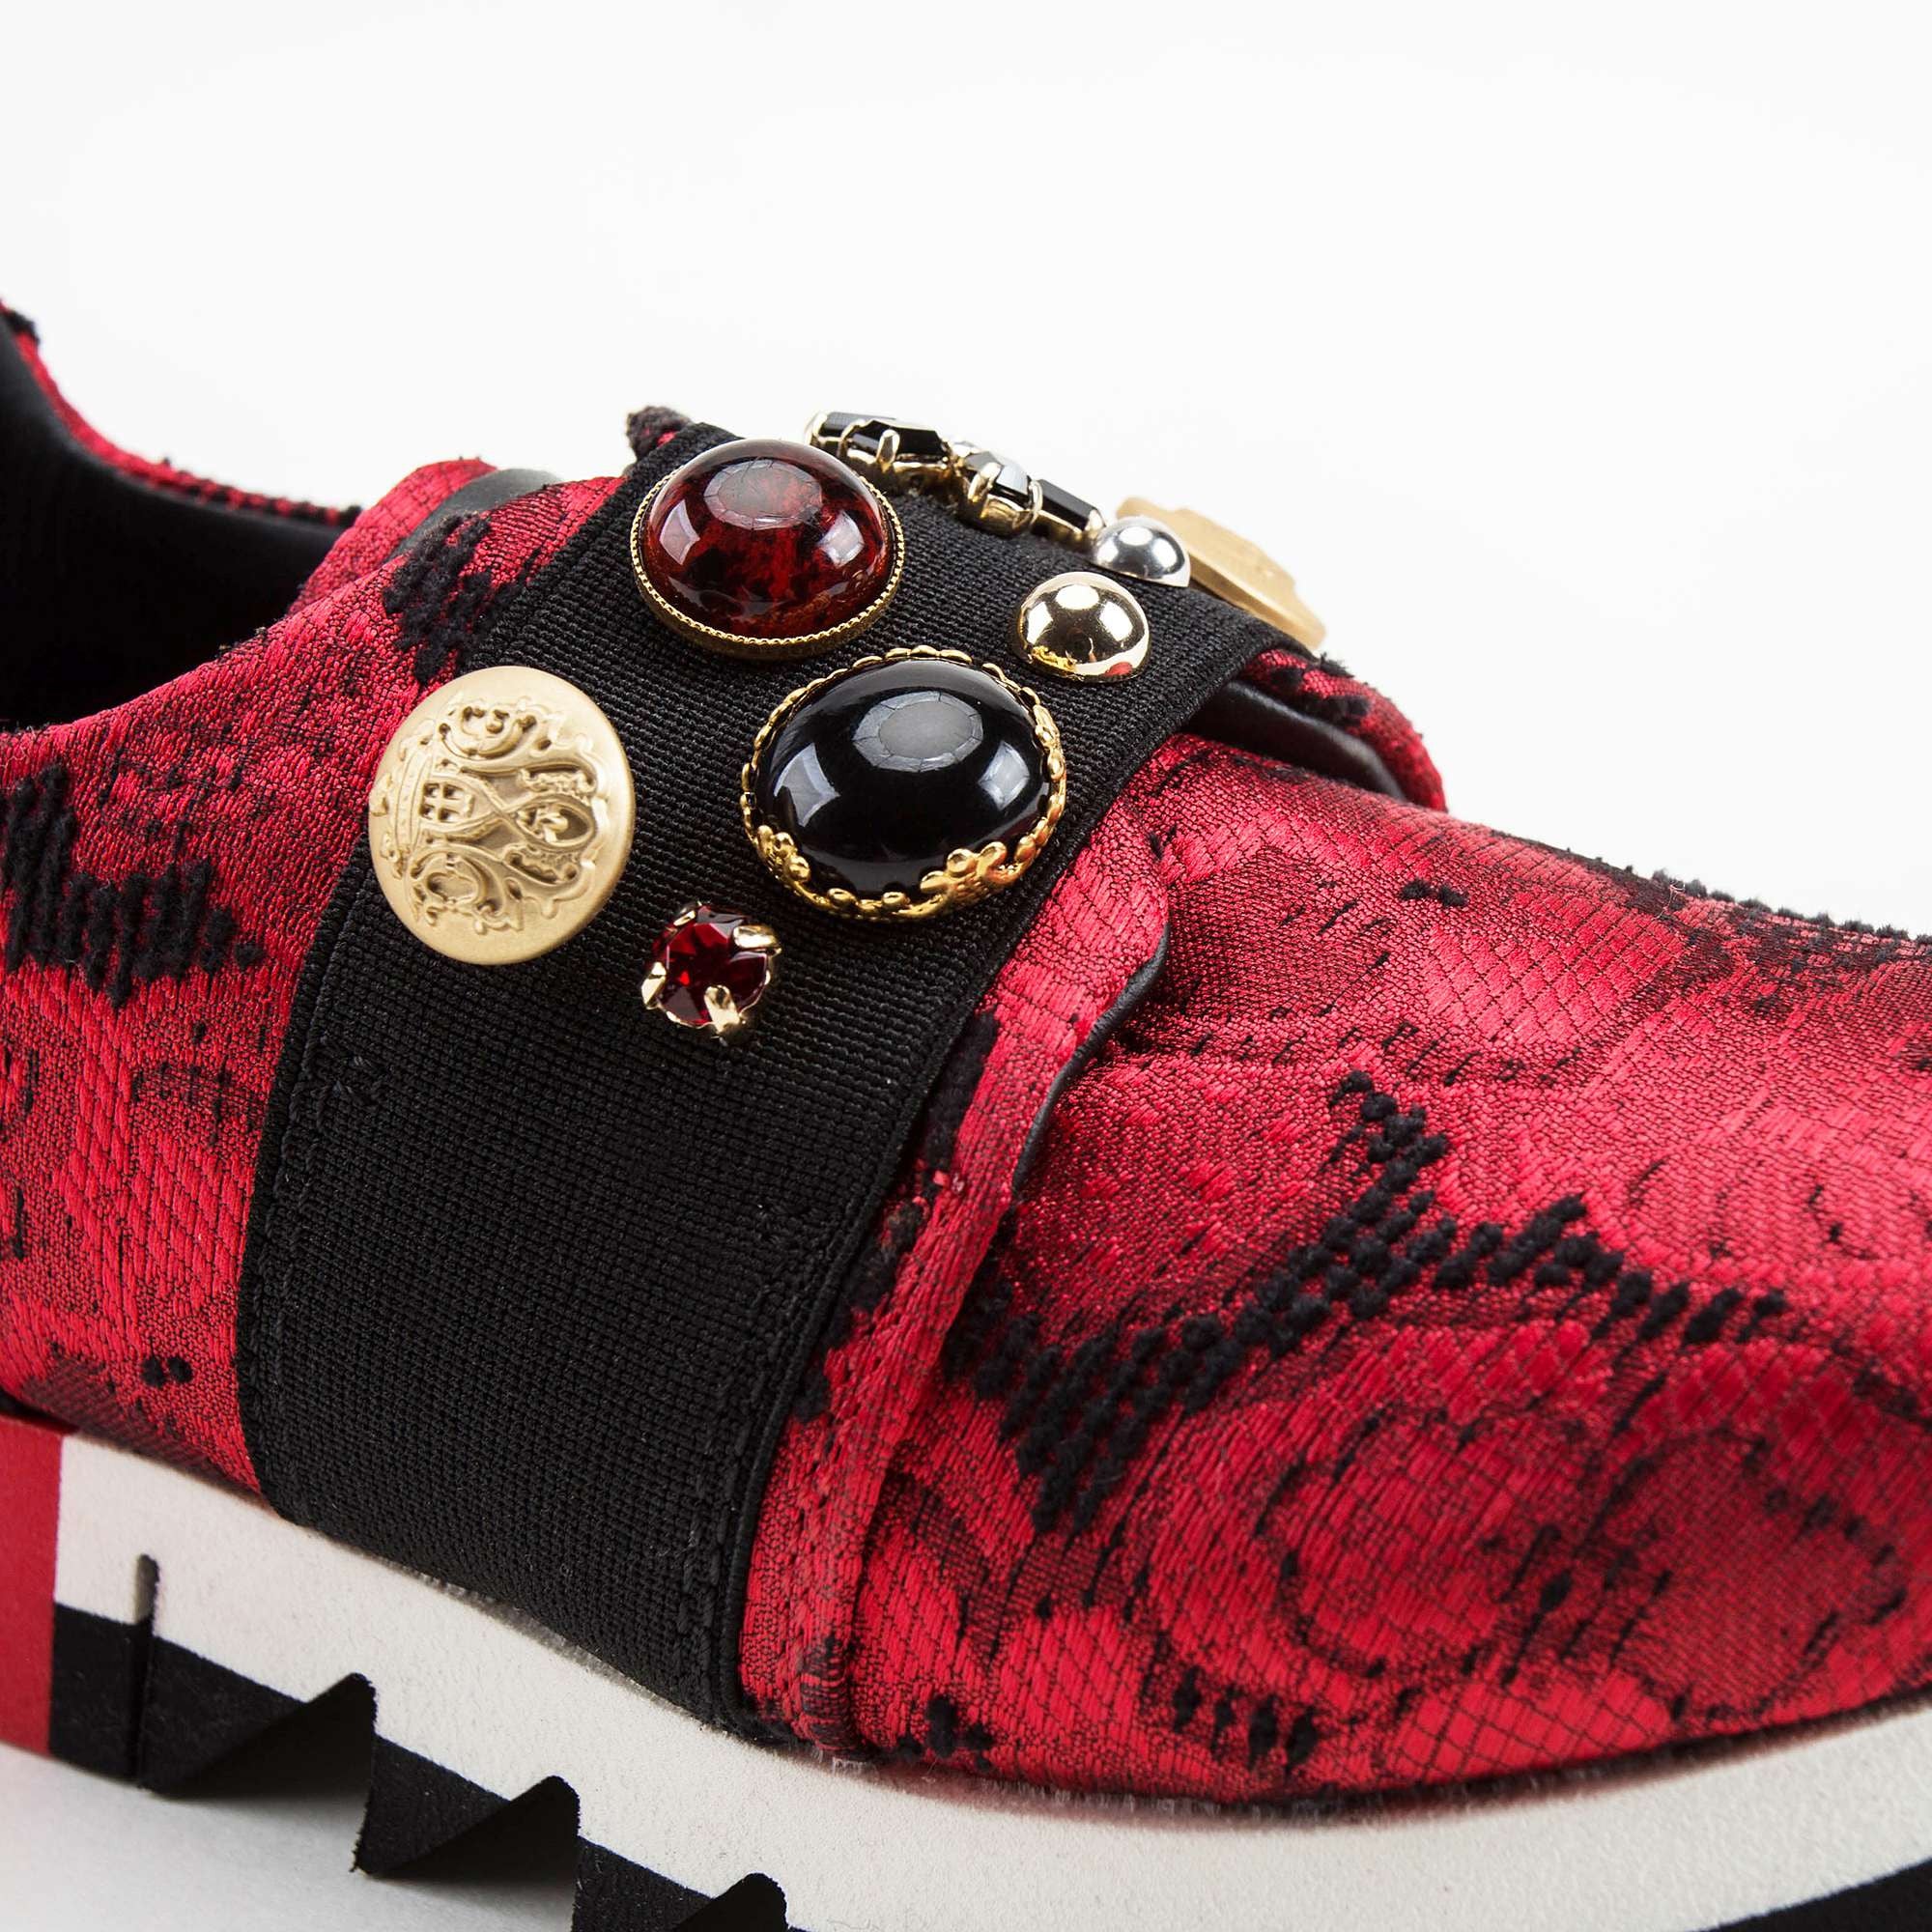 Girls Red & Black Slip-on Sneakers With Swarovski Rhinestones